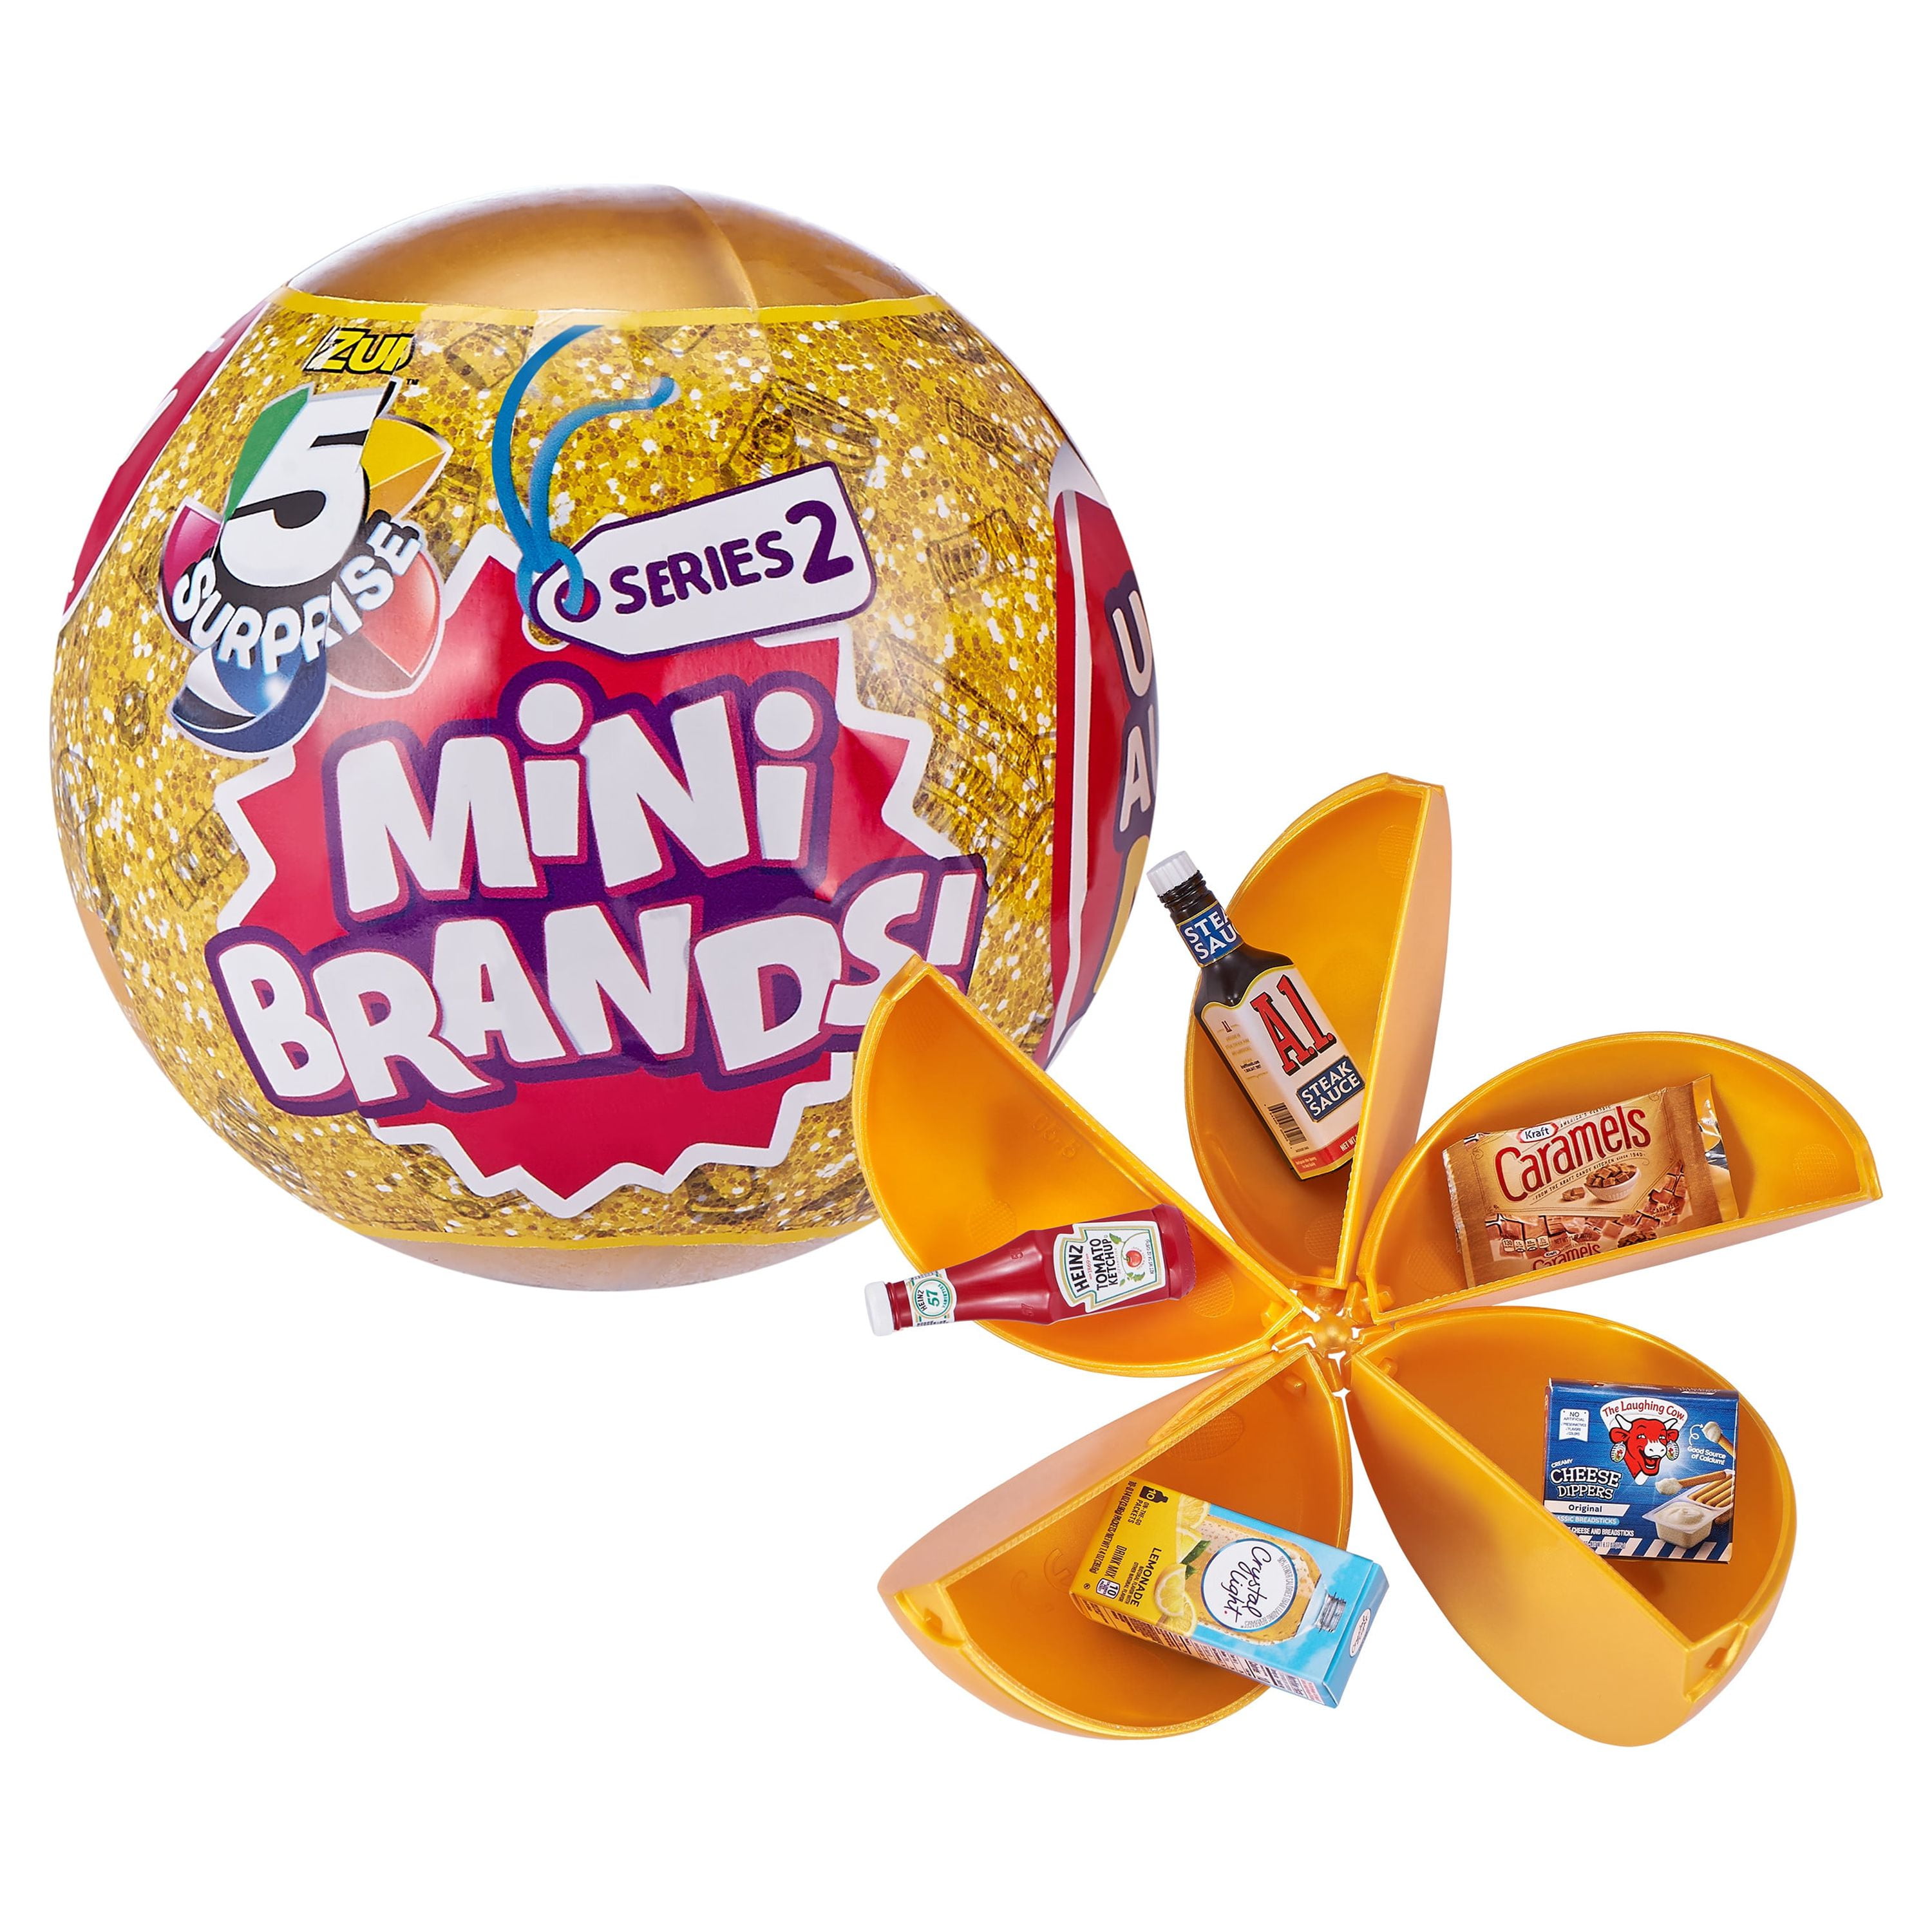 Mini Brands! Series 2 Mystery Pack, mini brands